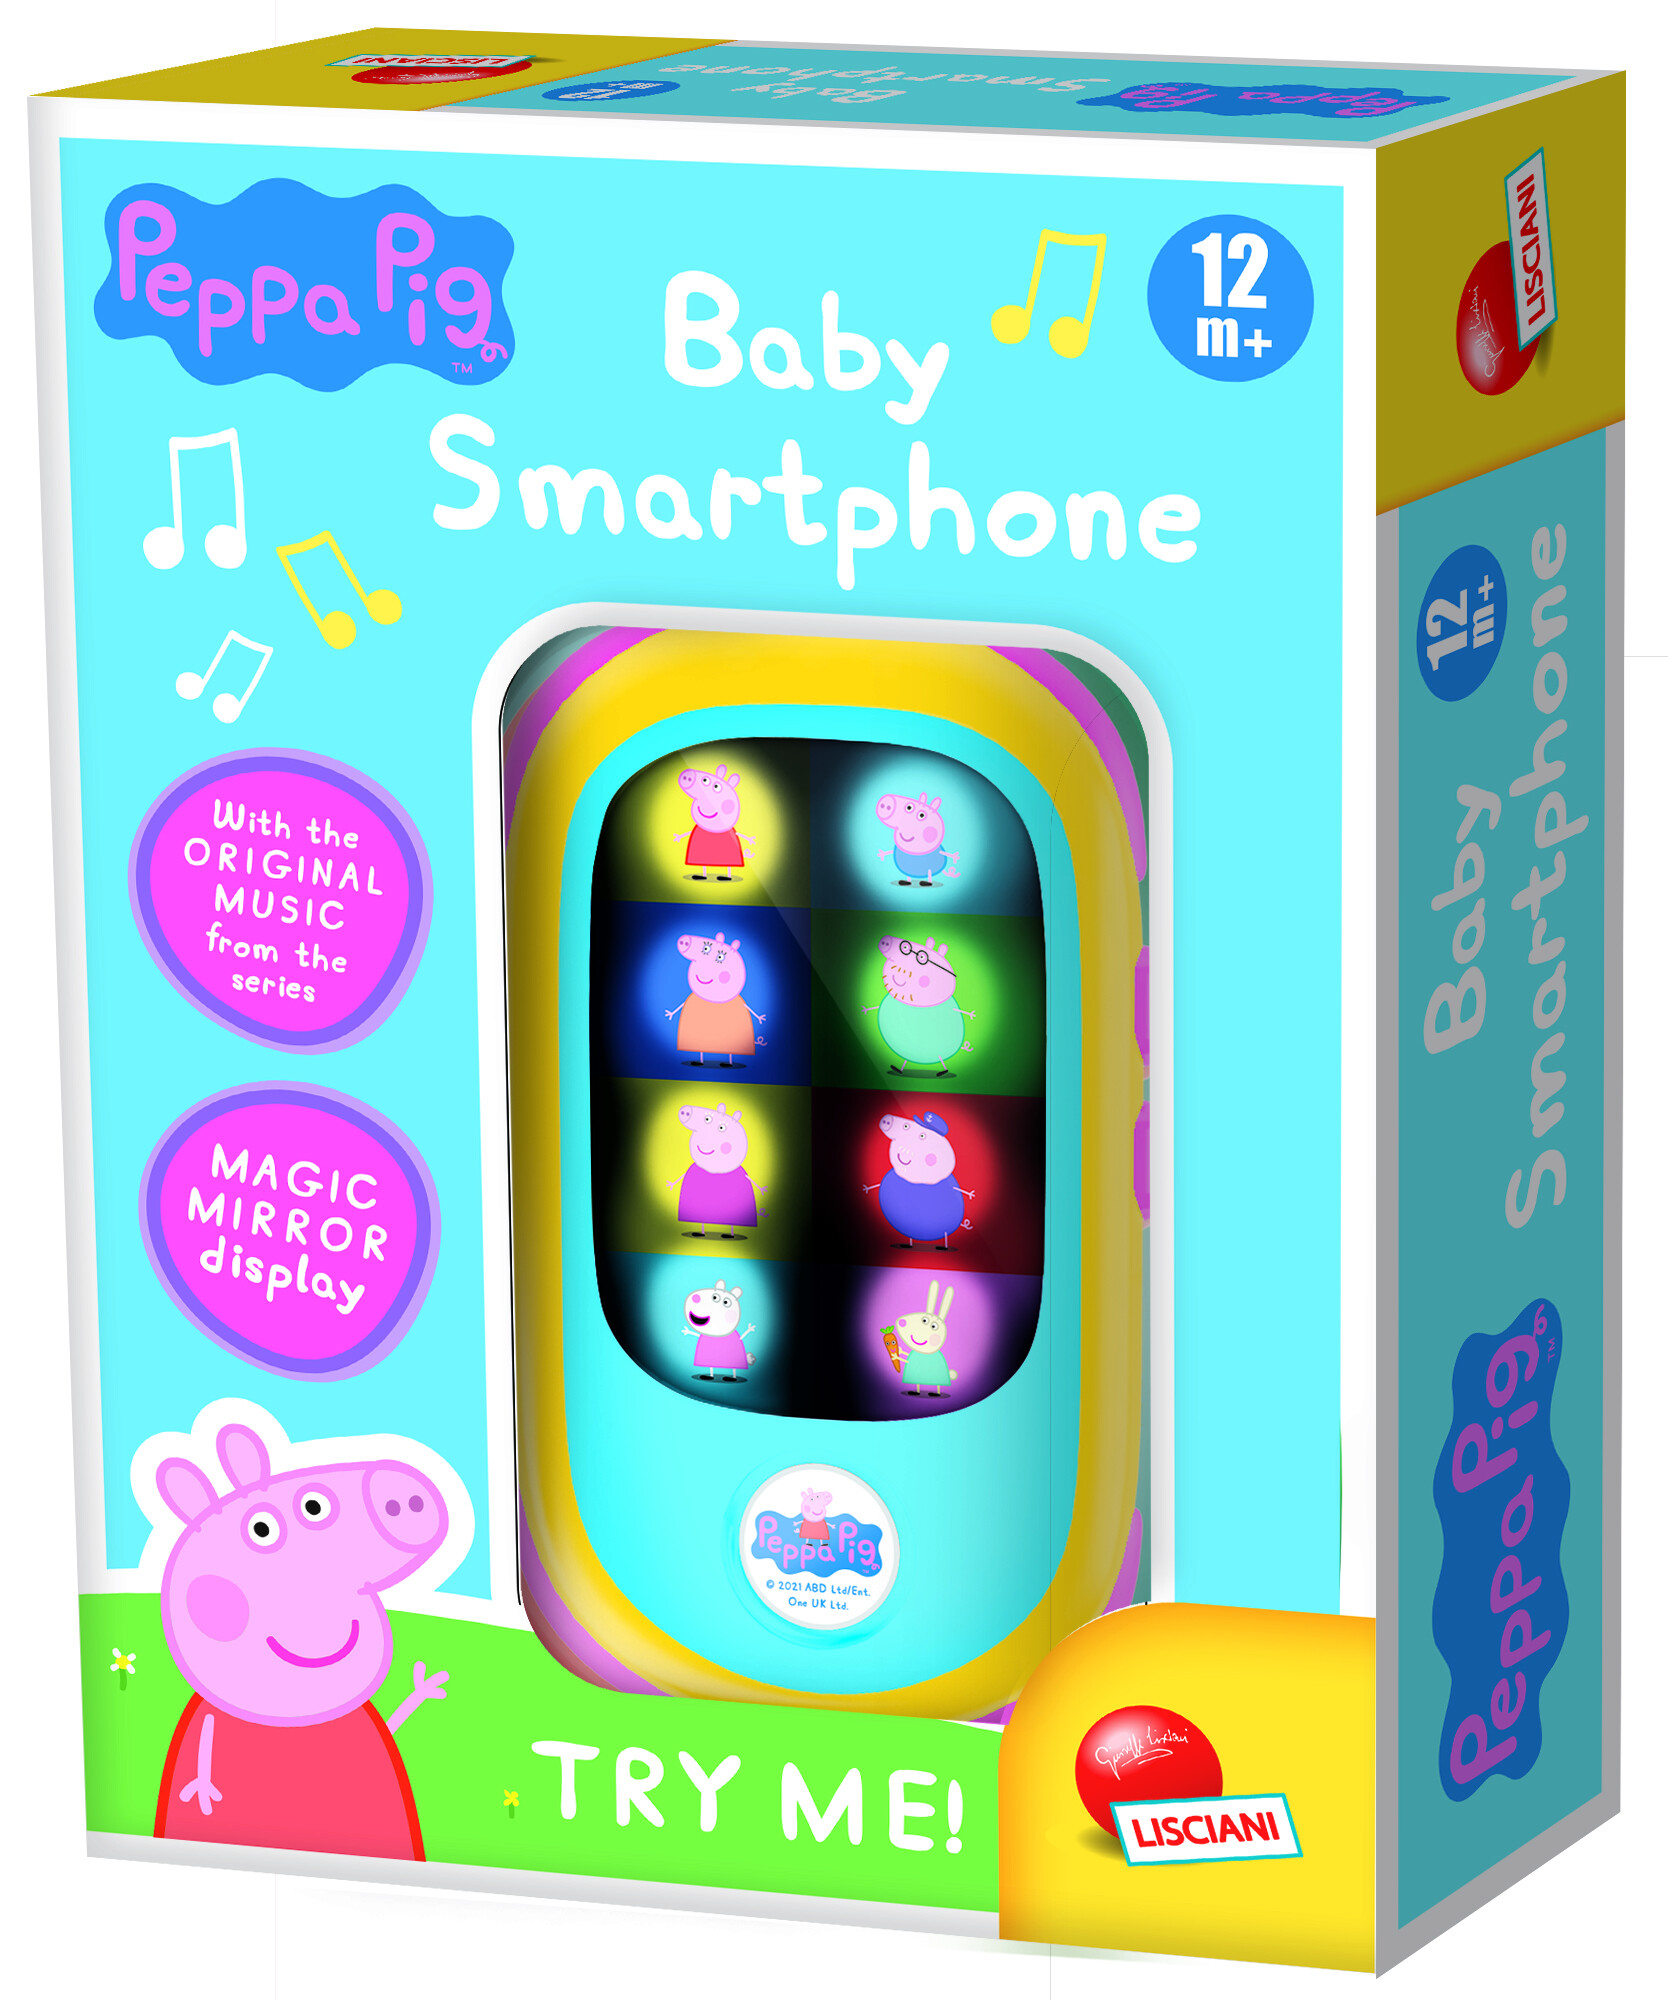 Peppa pig baby smartphone - LISCIANI